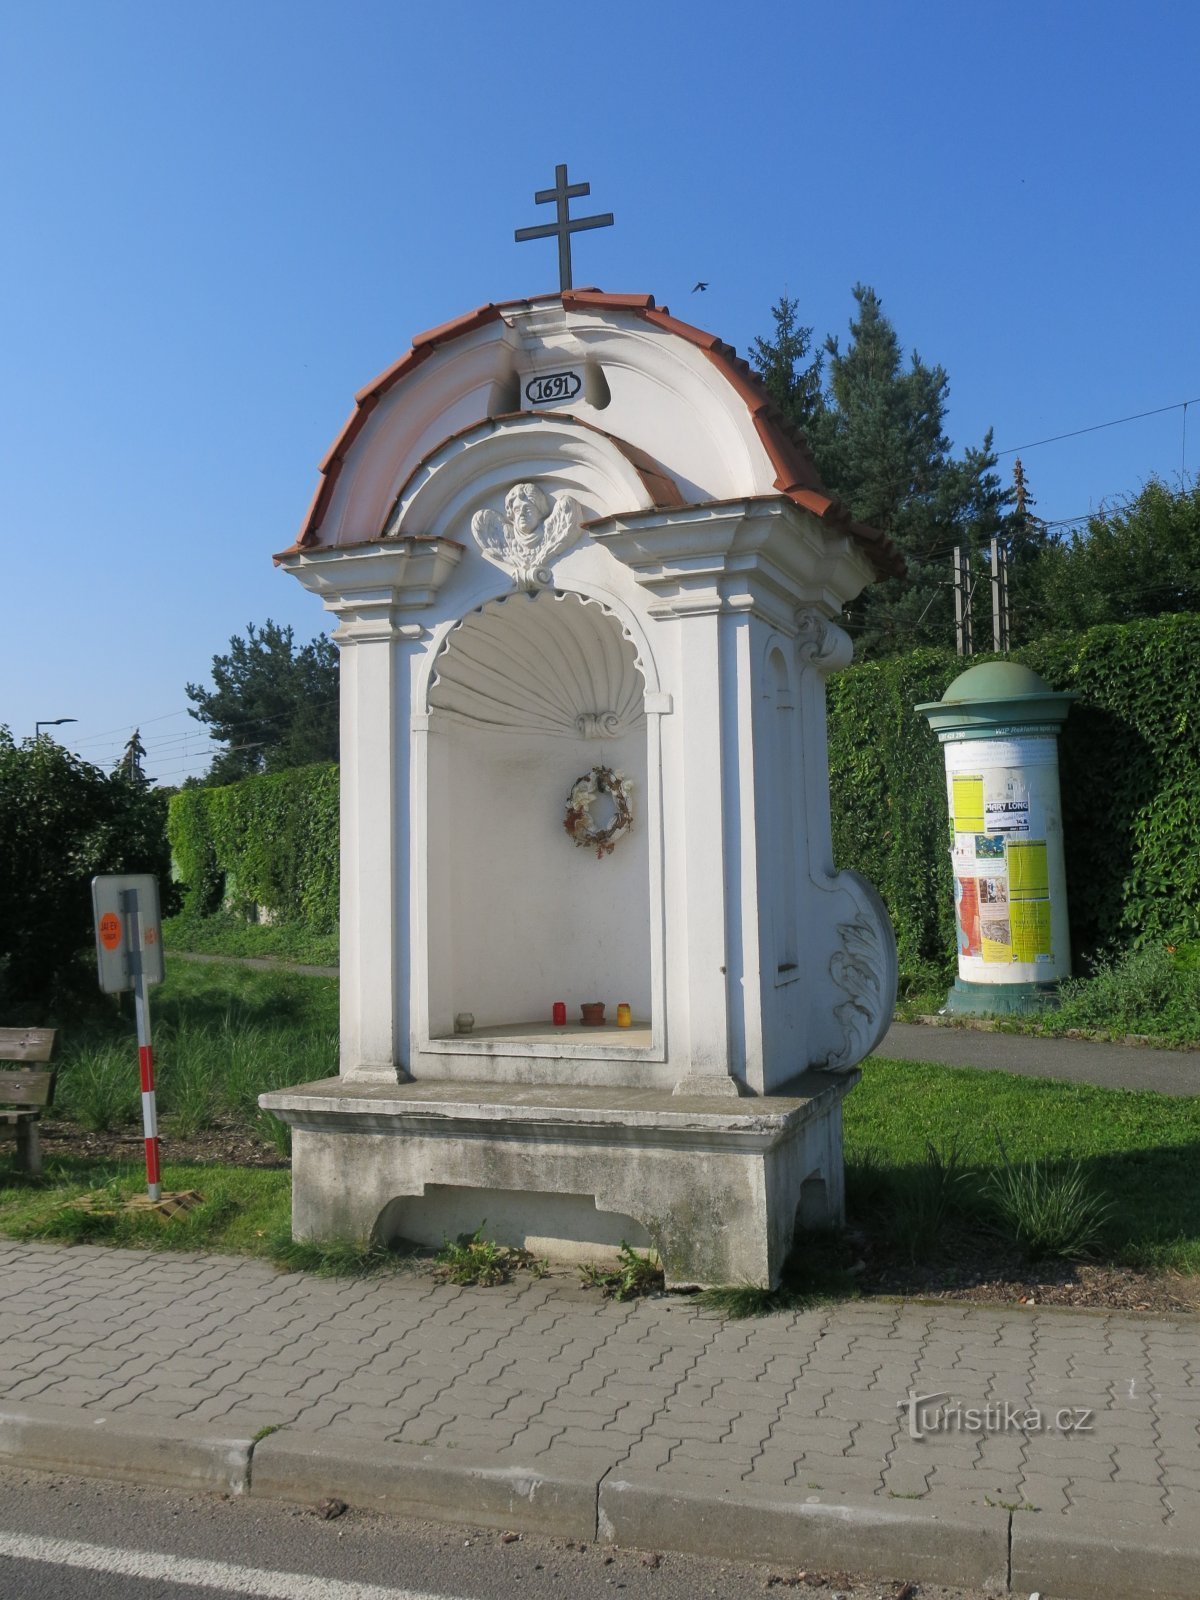 Planá nad Lužnicí - Pyhän Nikolauksen kappeli. Barbara